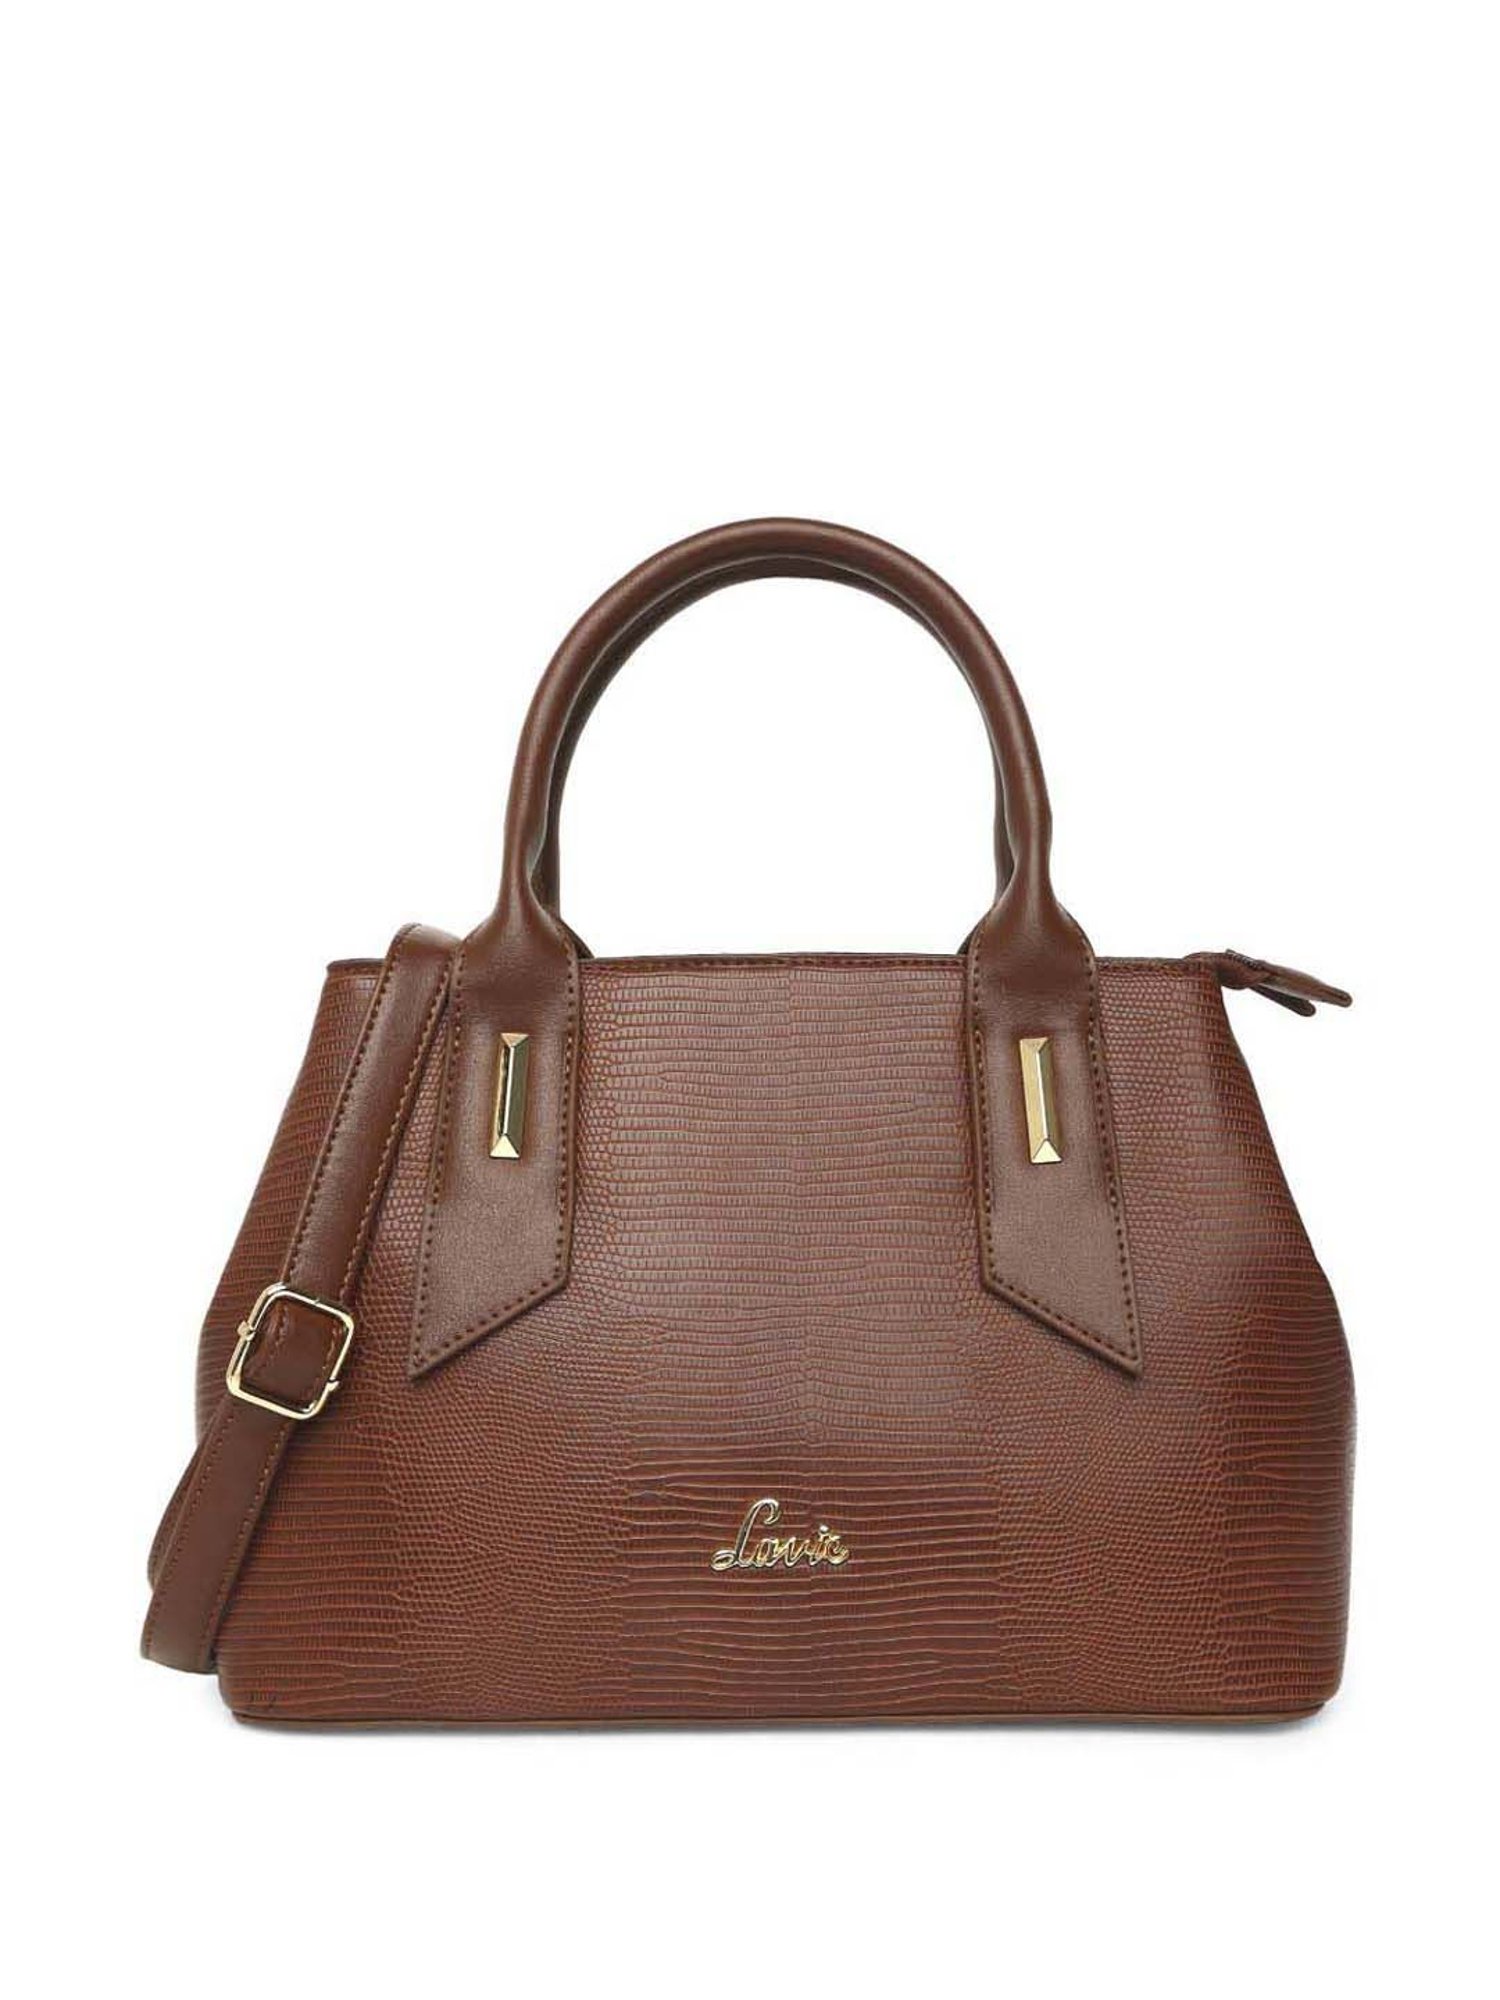 Buy Lavie Yalta Large Satchel Handbag Online at Best Prices in India -  JioMart.